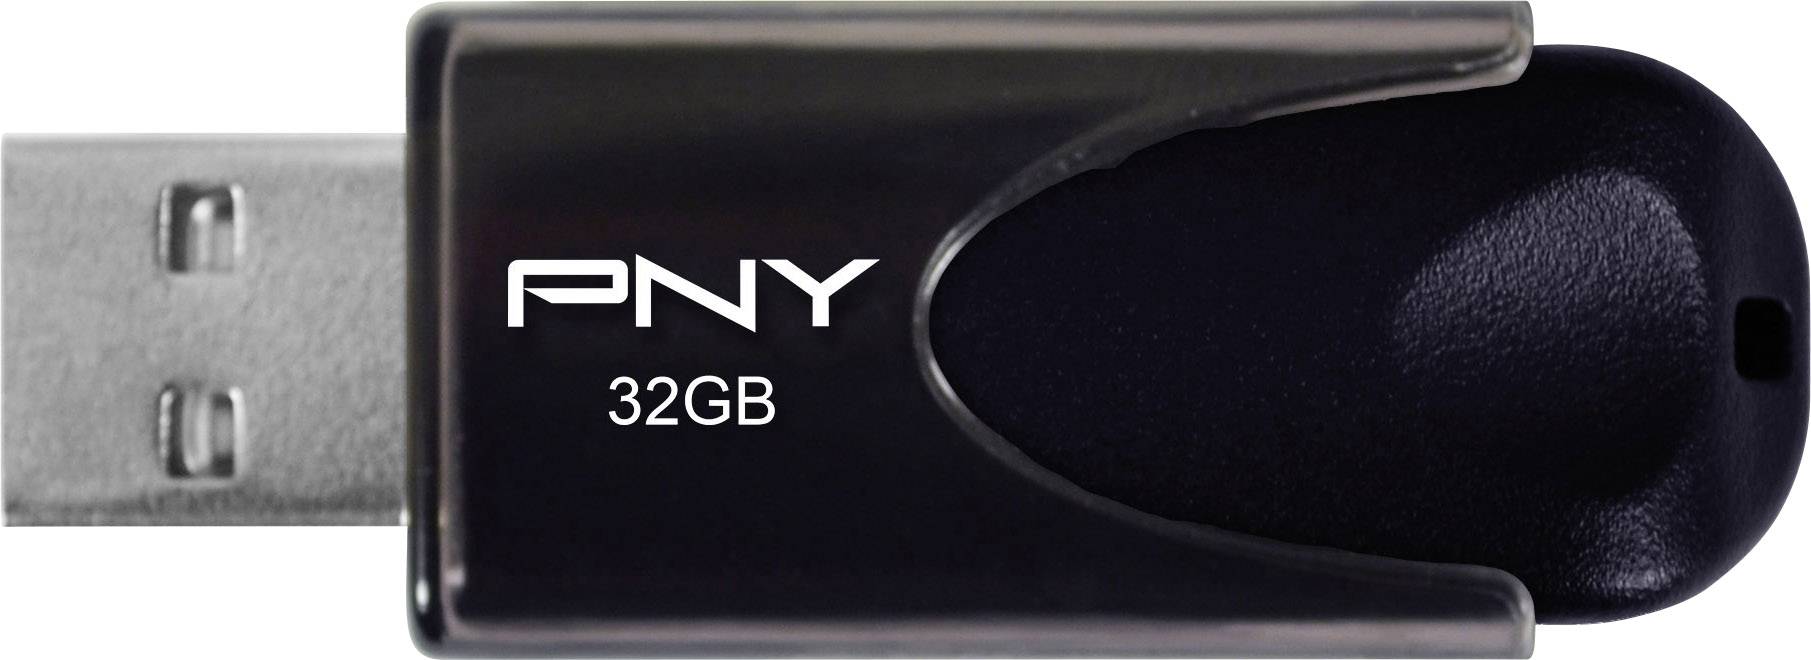 PNY USB-Stick Attaché 4 2.0 32GB lesen 25MB/S schreiben 8MB/S